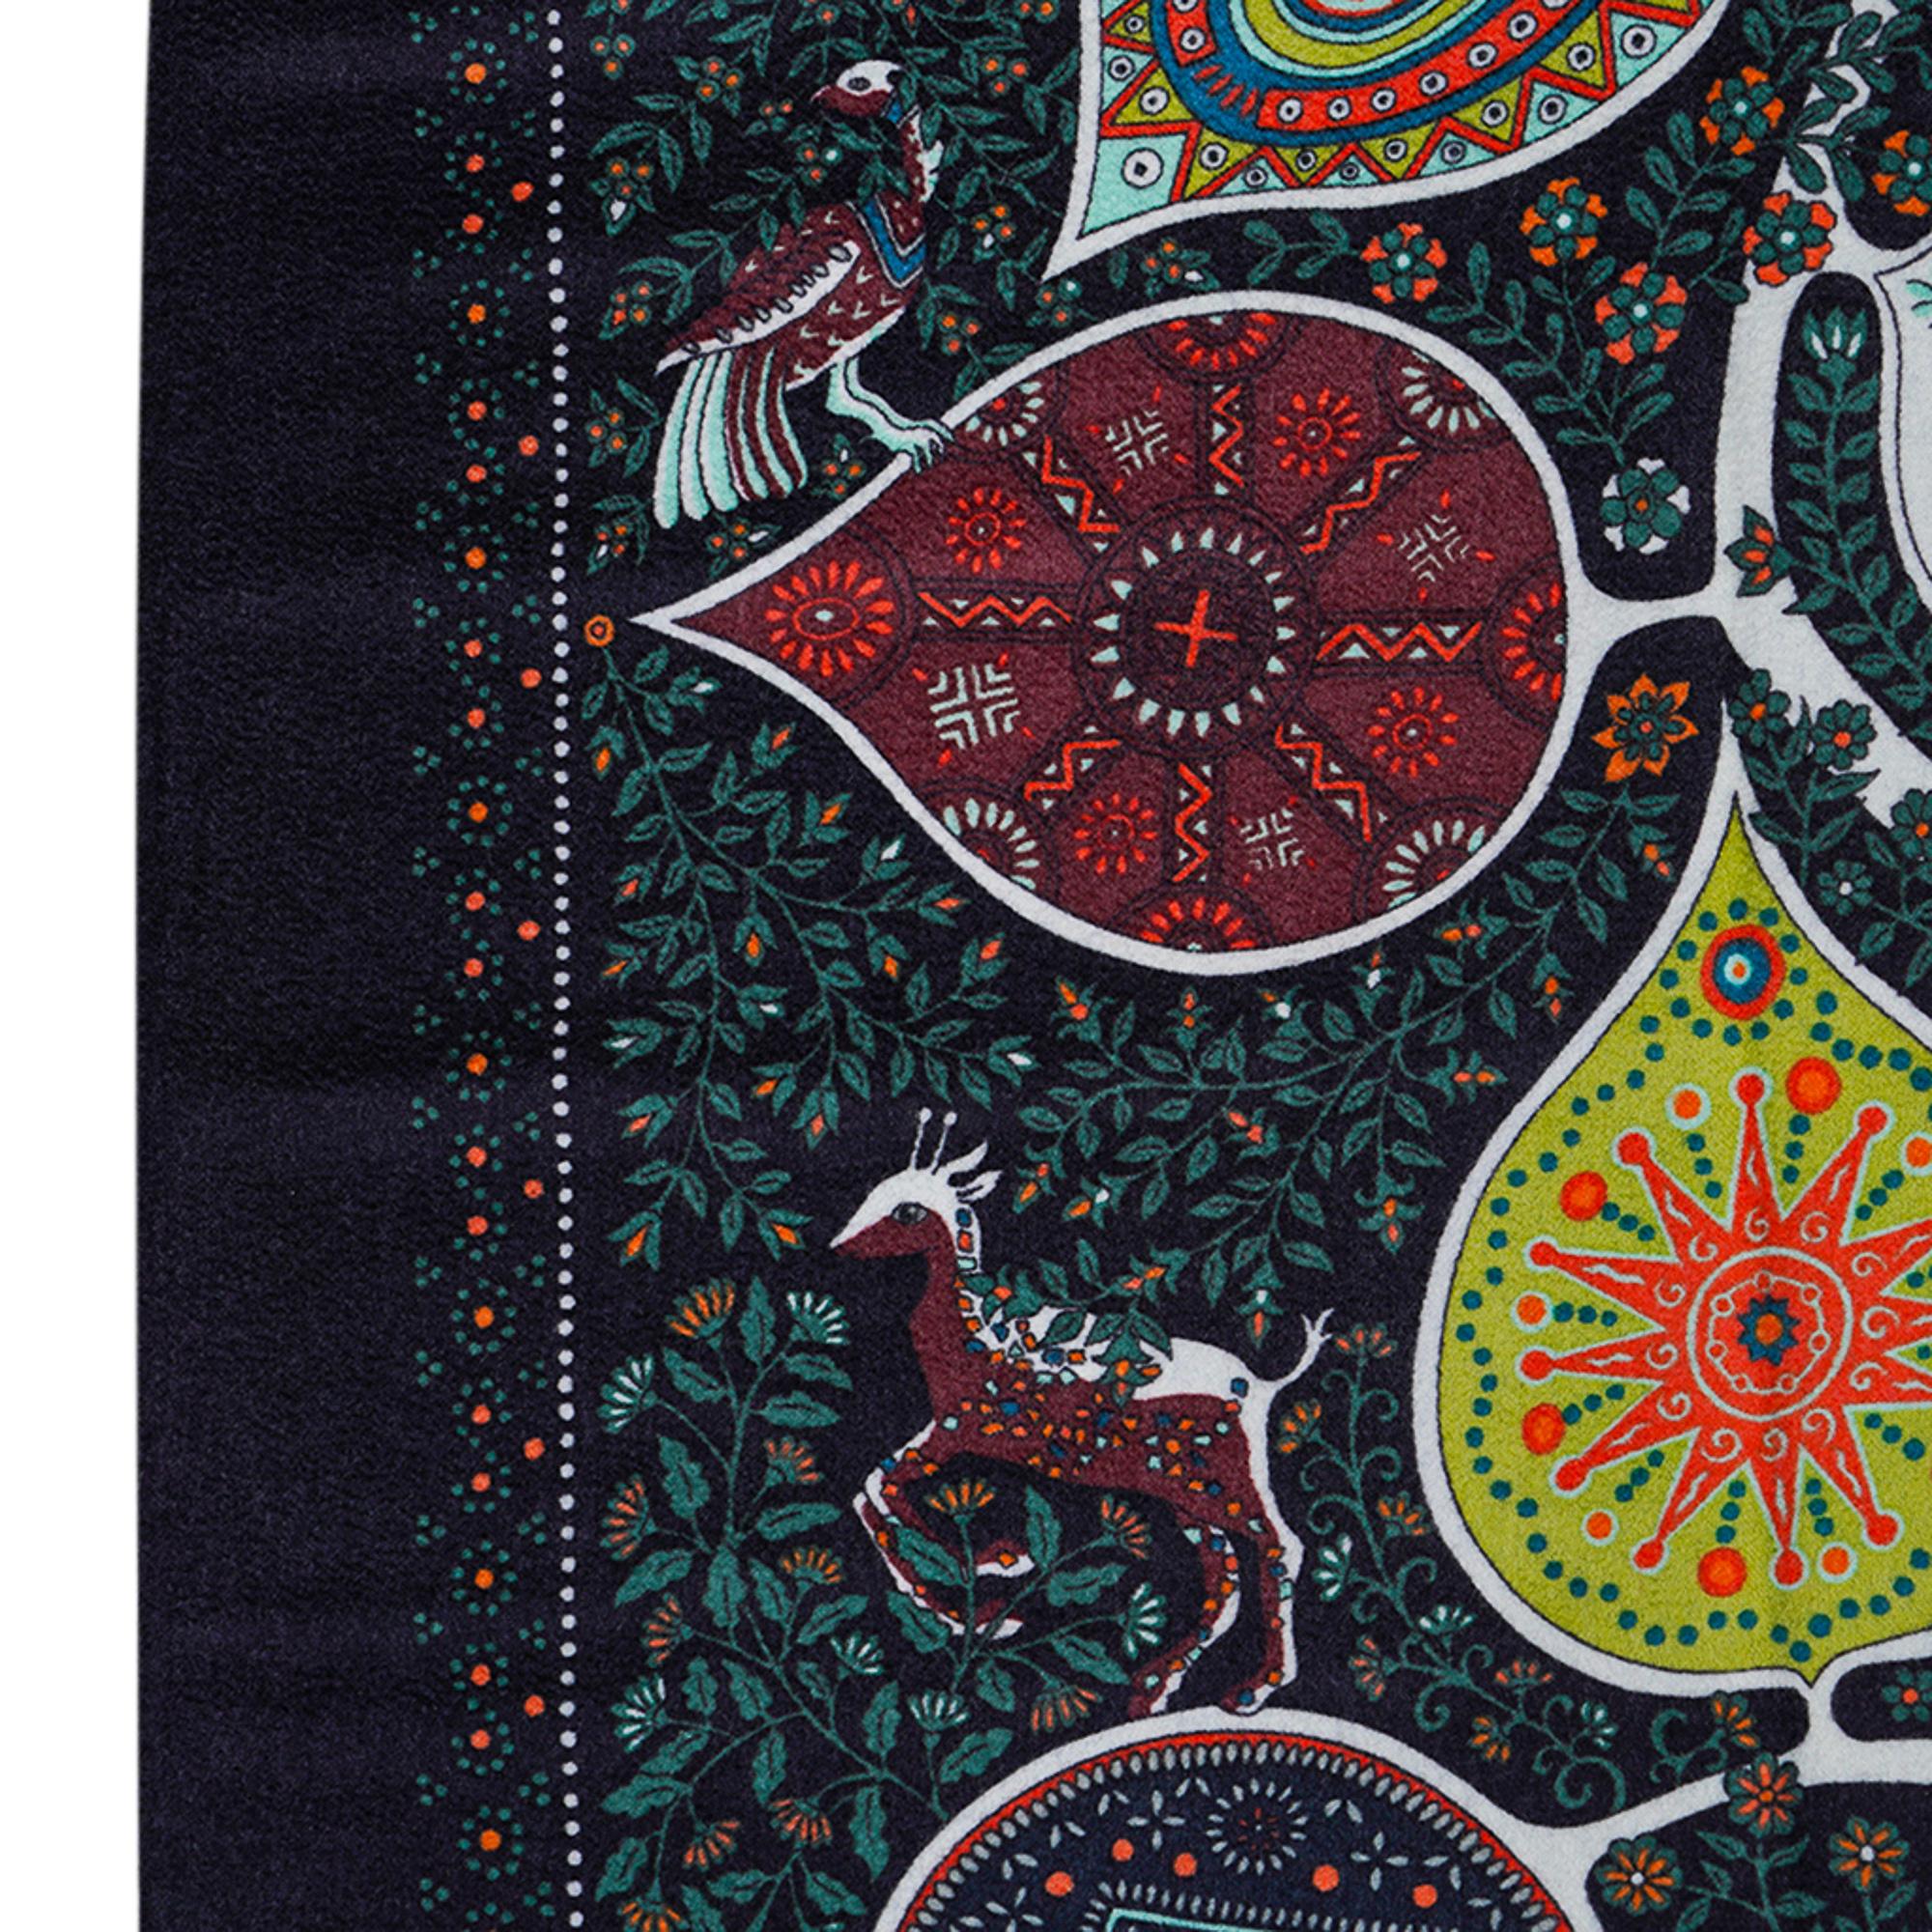 Hermes Blanket Tree of Life Blanket Multicolored Cashmere / Silk New 12